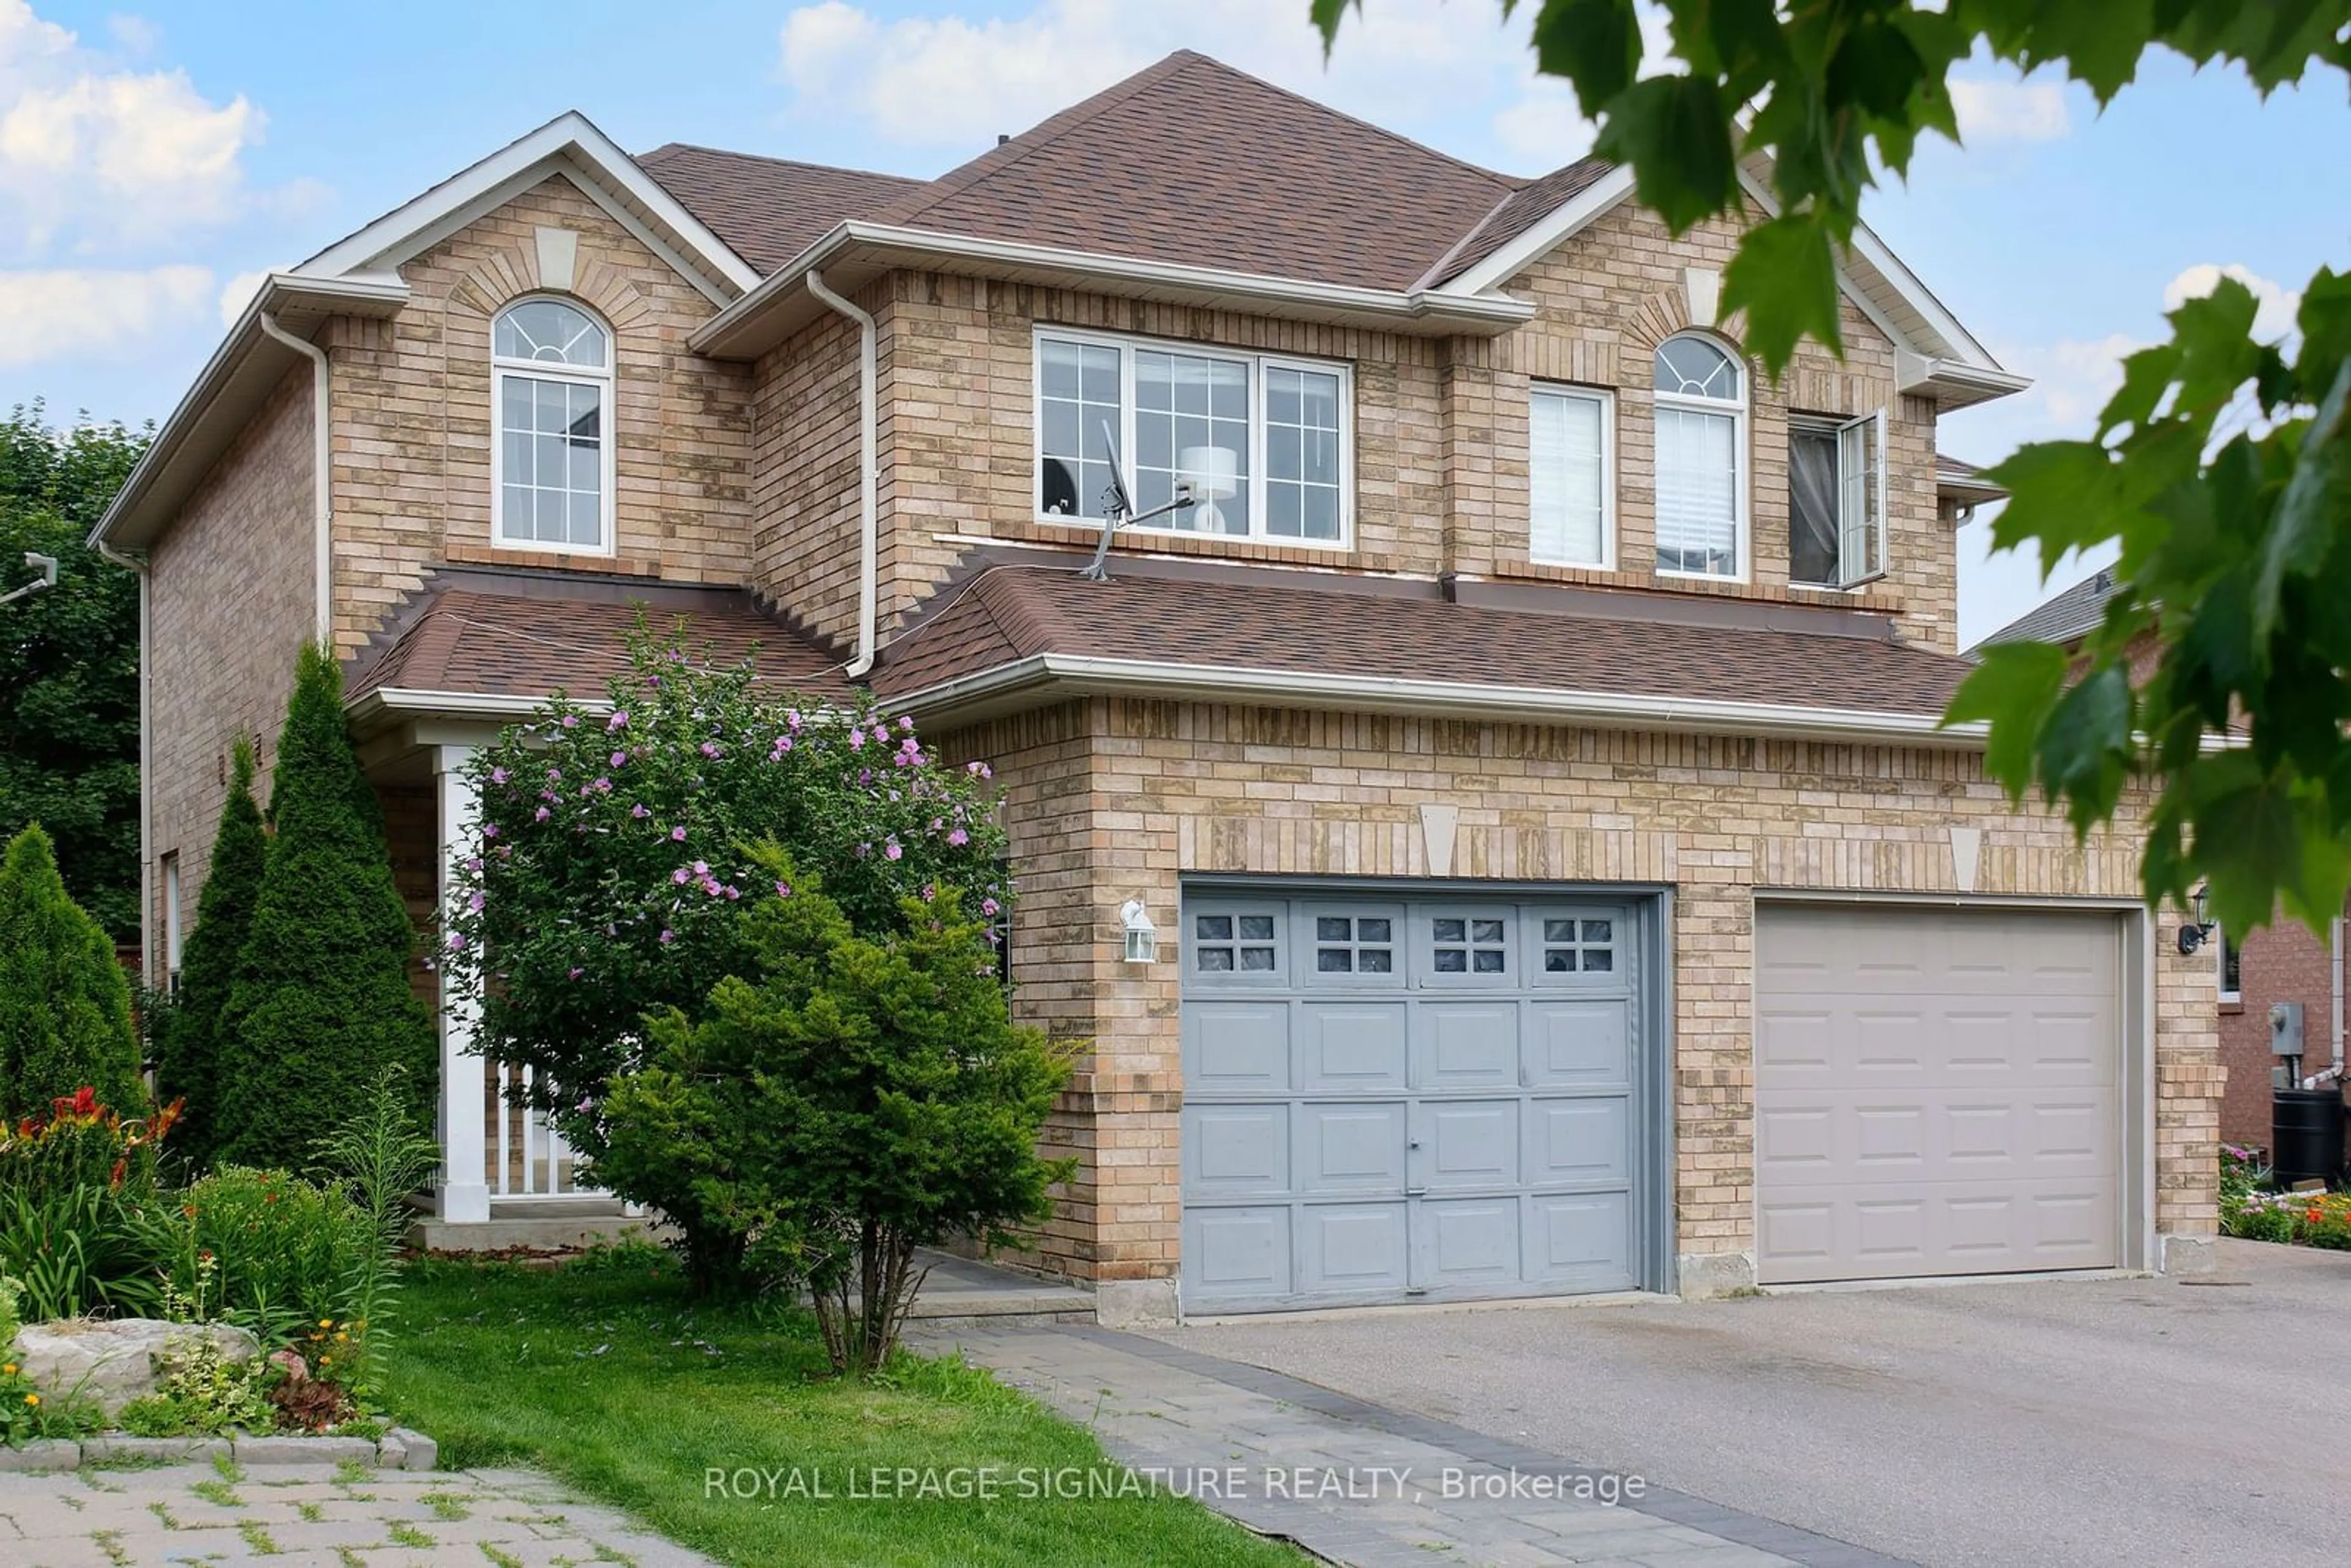 Home with brick exterior material for 39 Hacienda Dr, Richmond Hill Ontario L4E 3W8